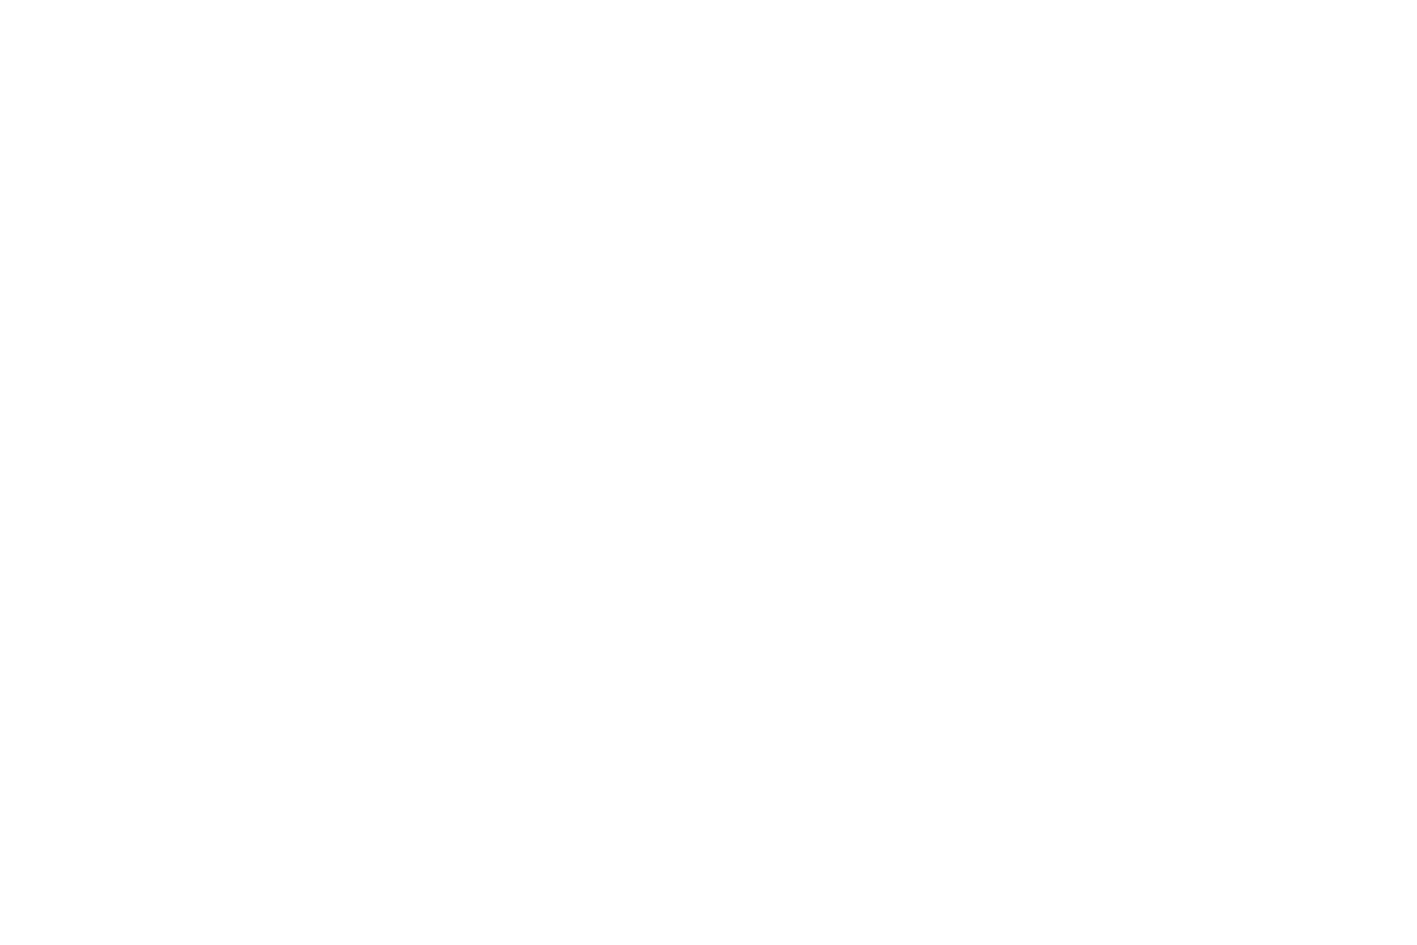 HORECA Entertainment